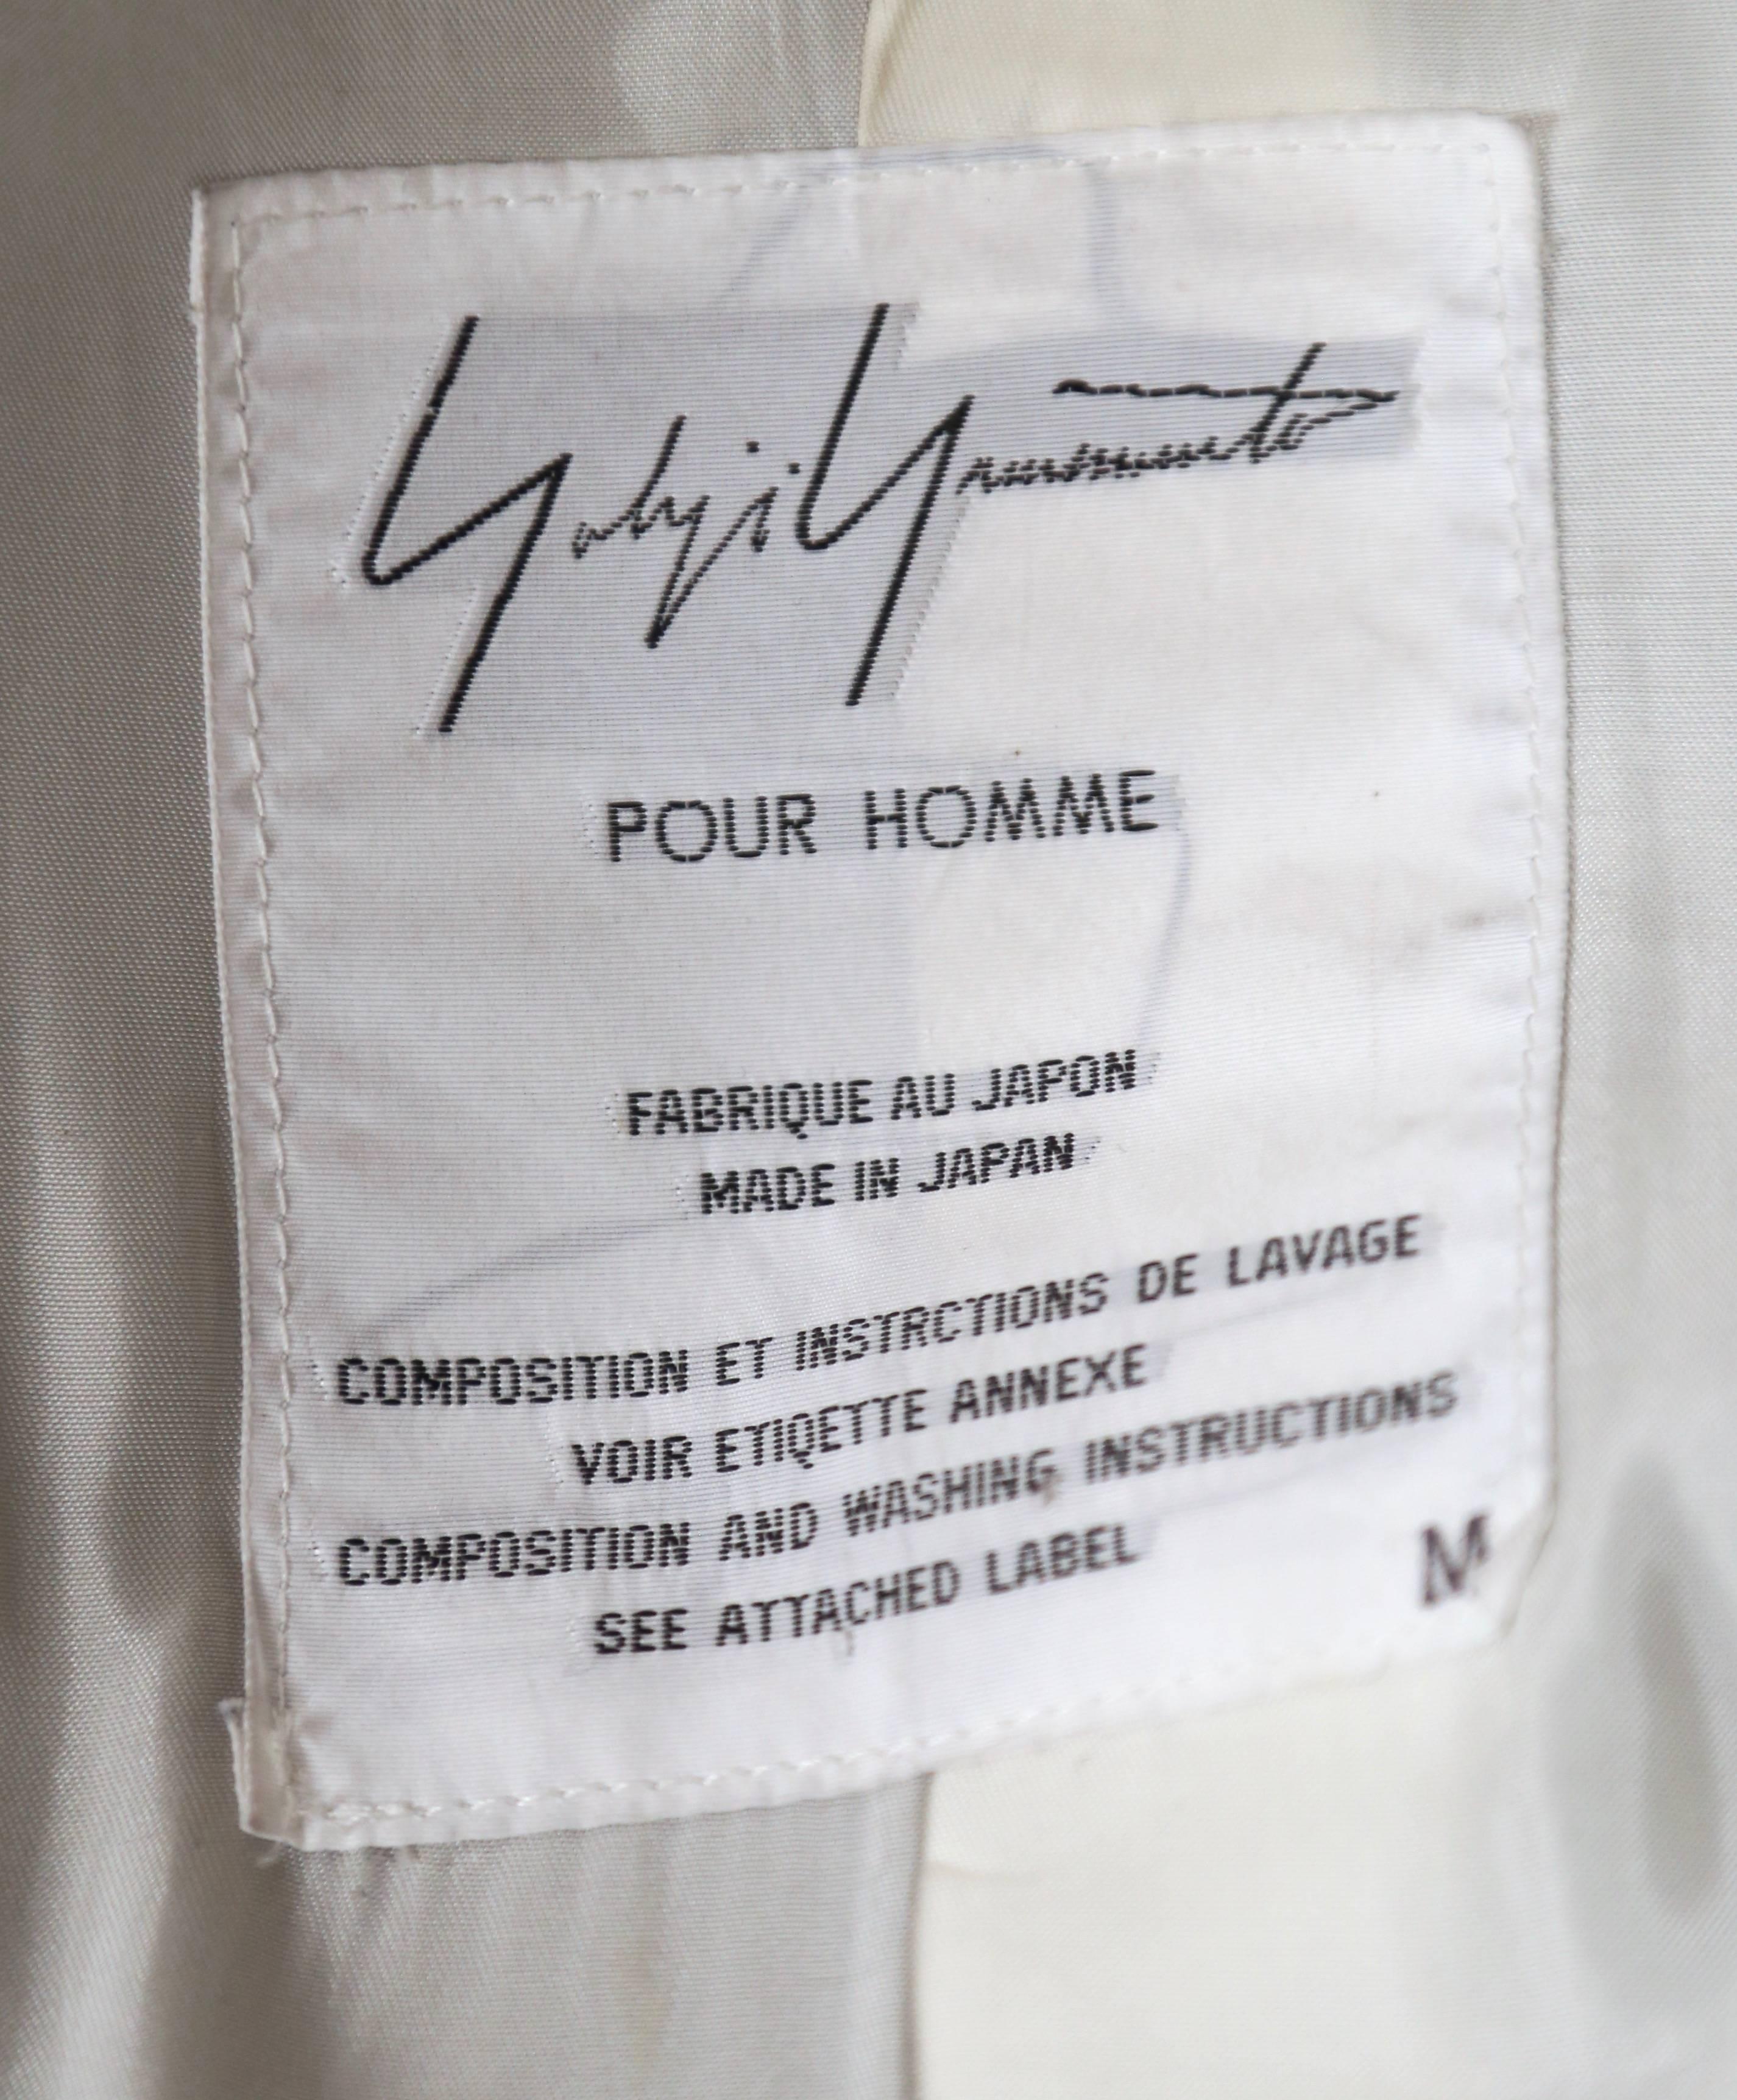 Black 1991 Yohyi Yamamato Homme wool coat with Marilyn Monroe print lining